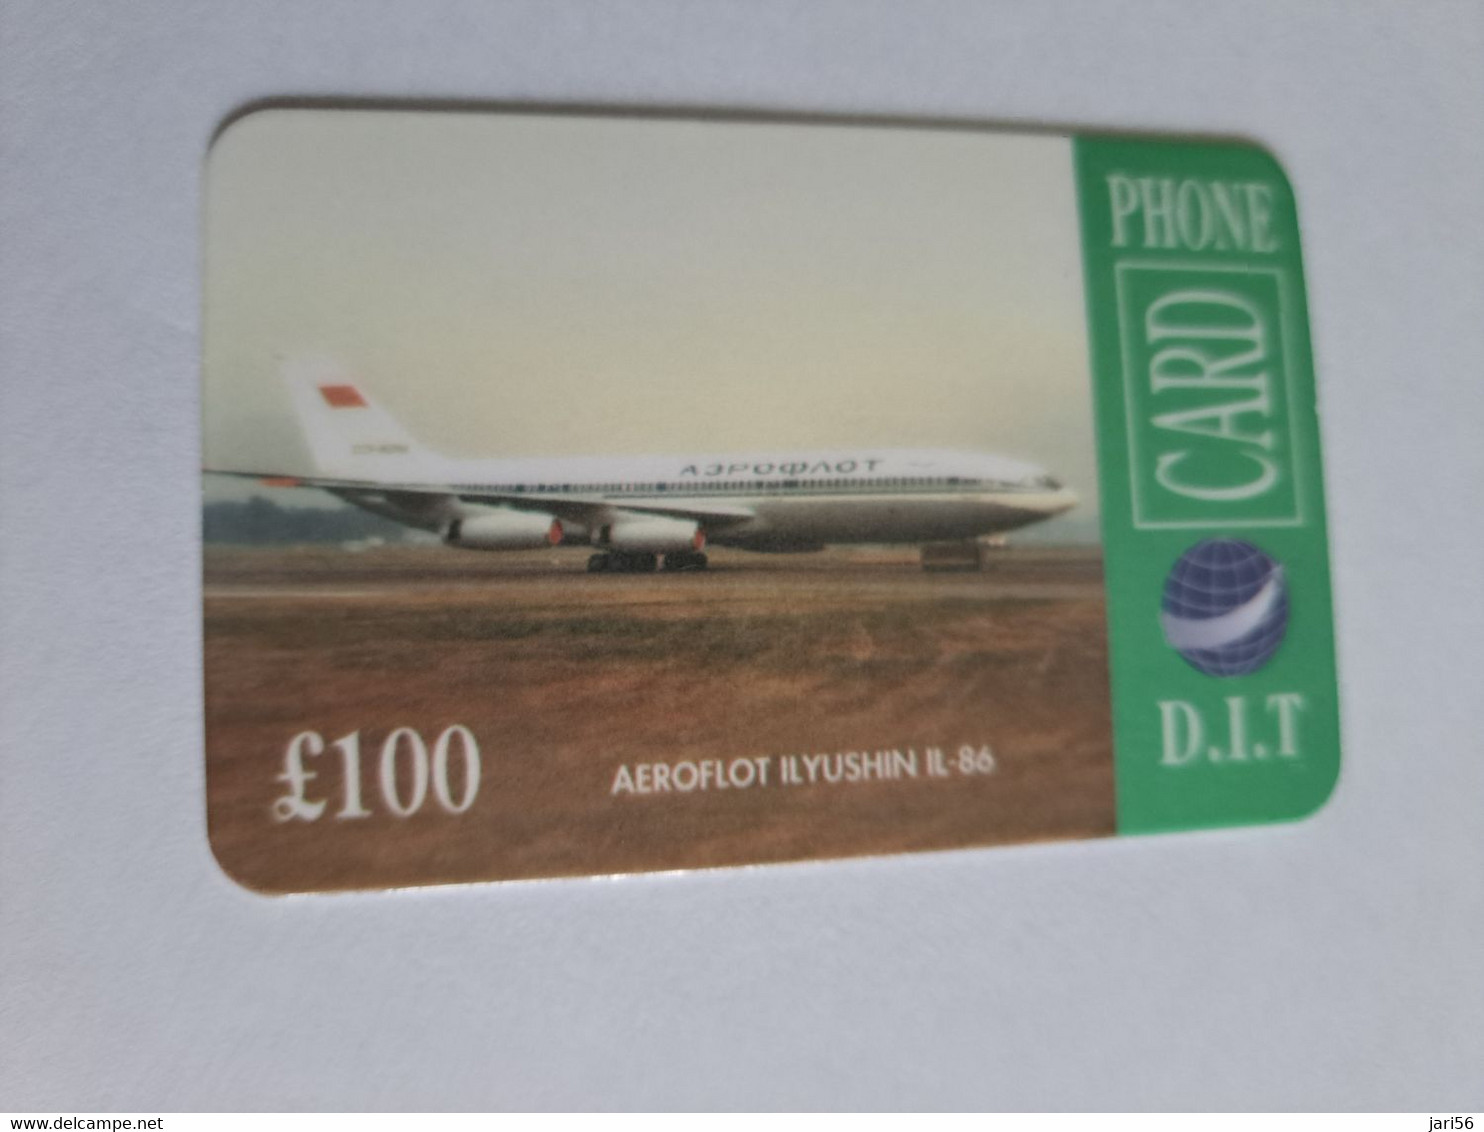 GREAT BRITAIN   100 POUND   / AEROFLOT YUSHIN FL 86    DIT PHONECARD    PREPAID CARD      **12902** - Verzamelingen